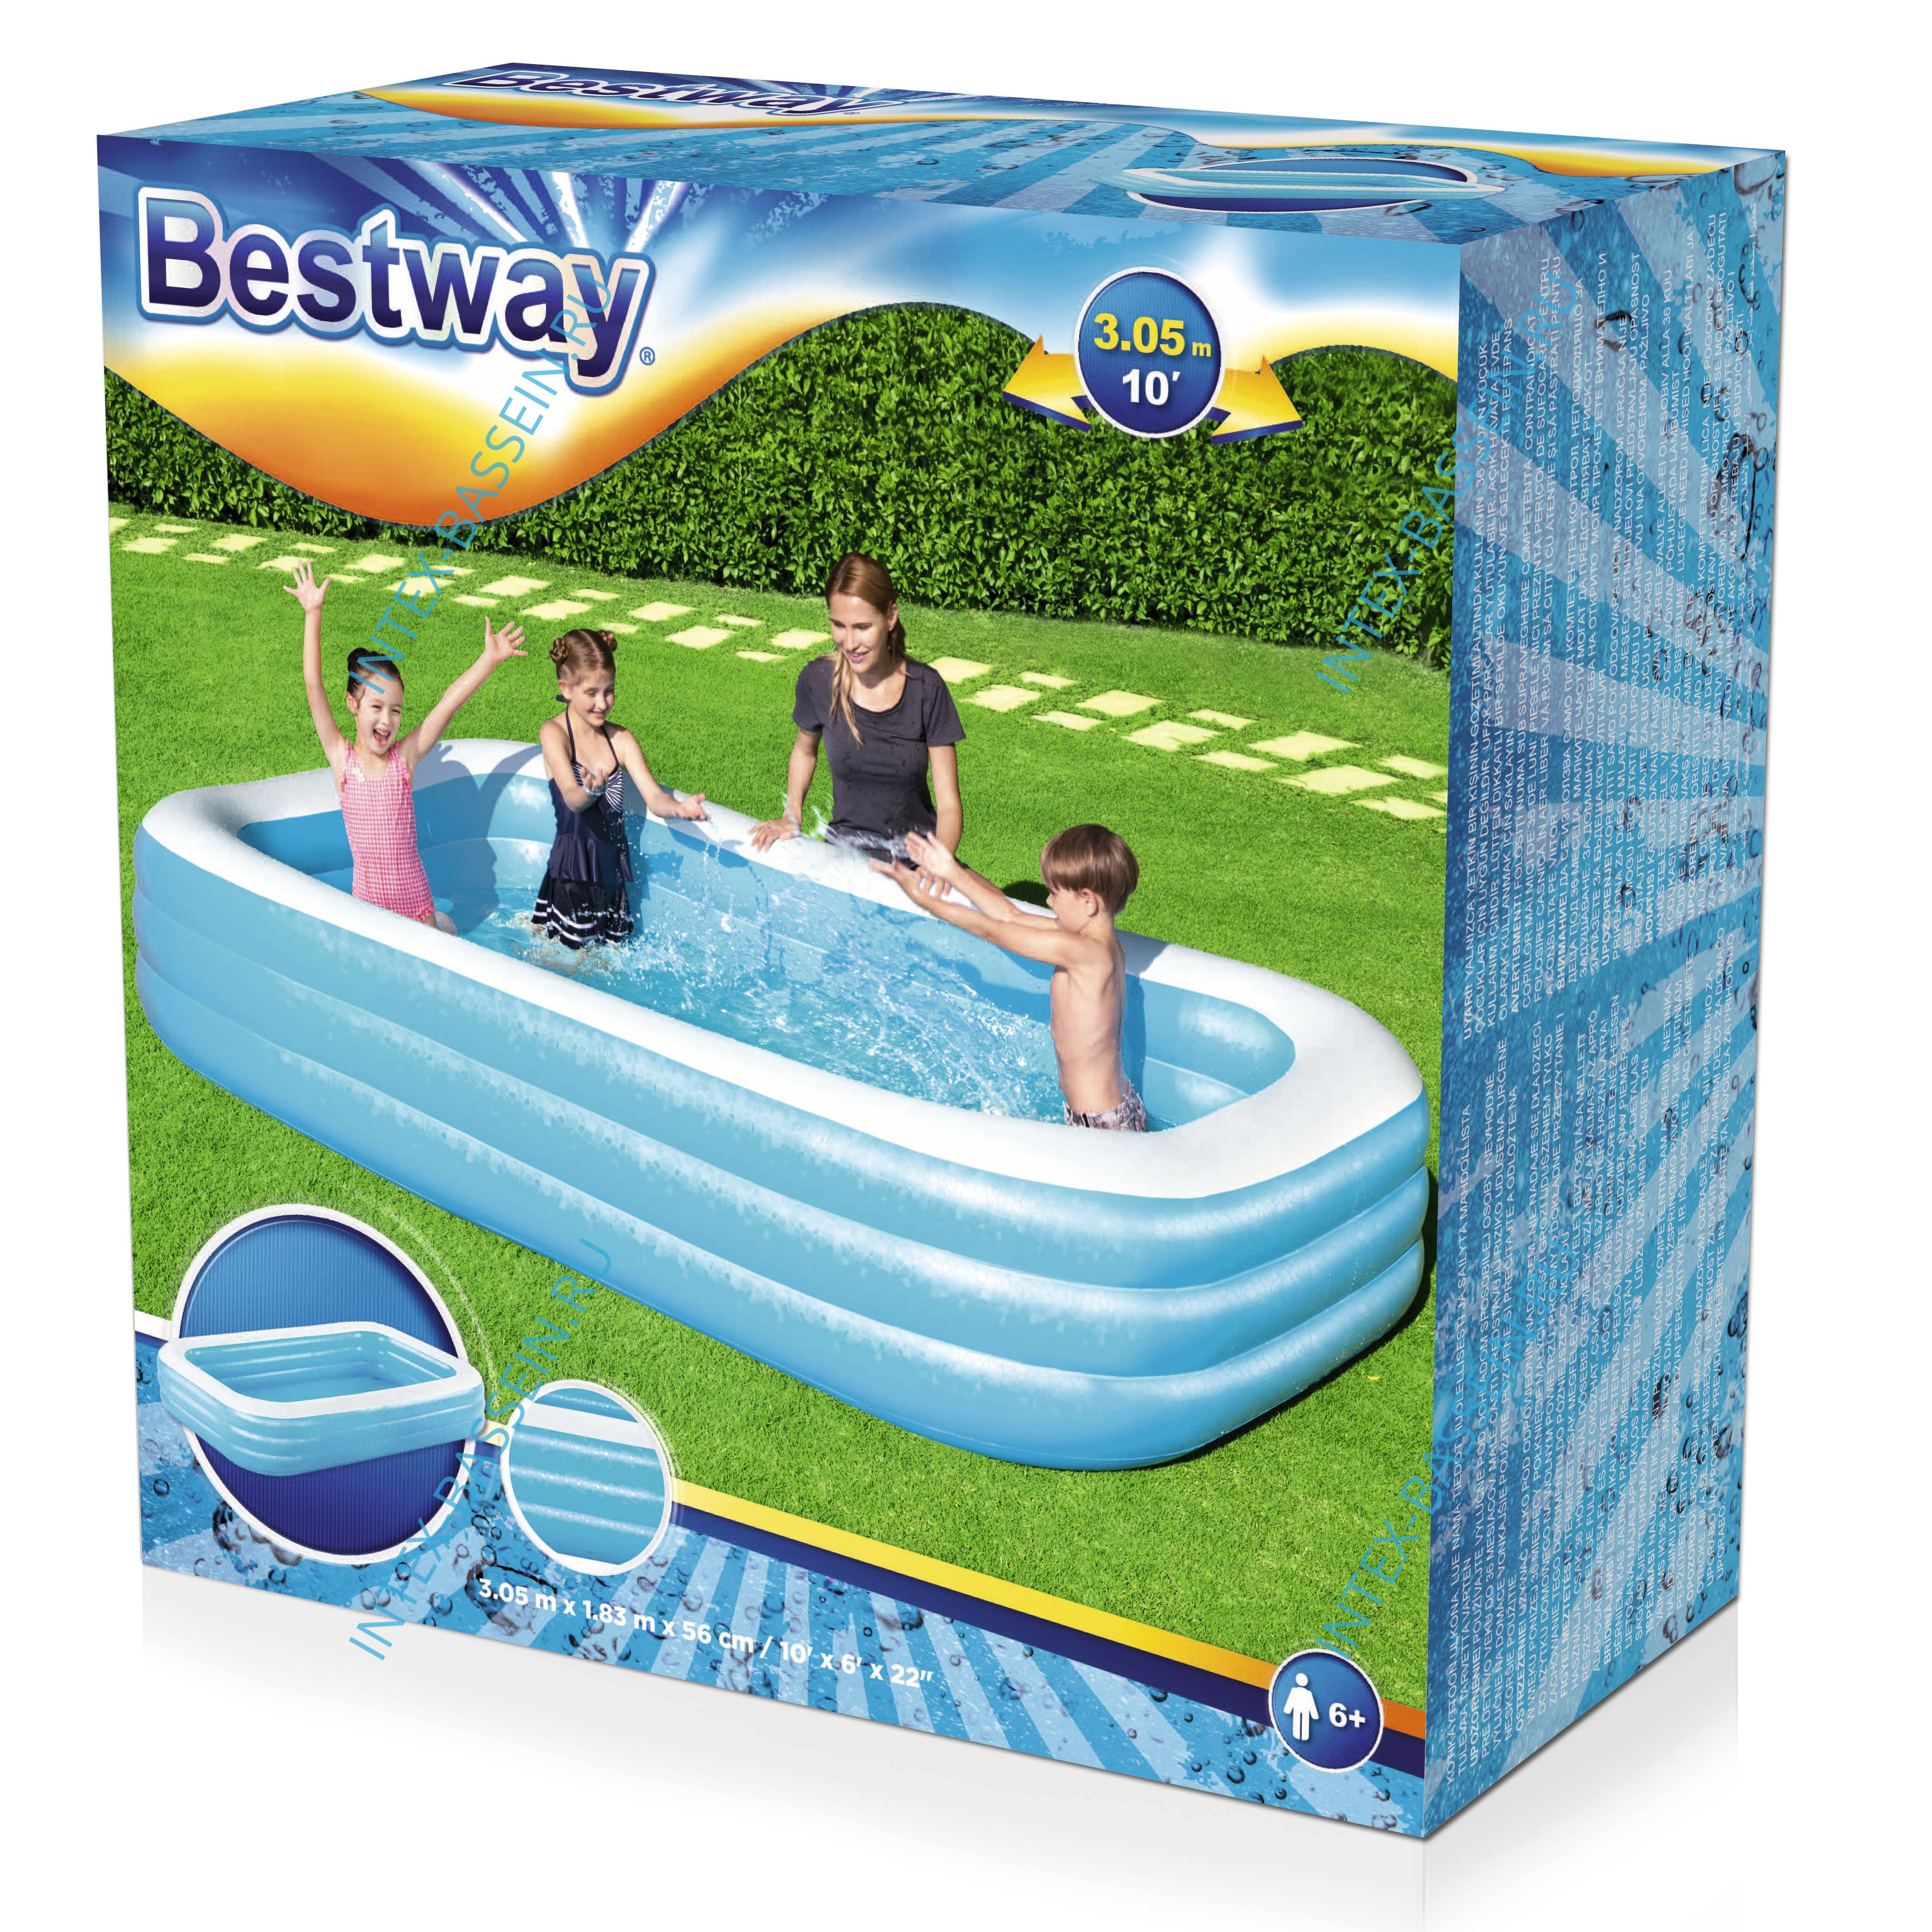 Детский надувной бассейн Bestway 3.05 x 1.83 x 0.56 м, артикул 54009